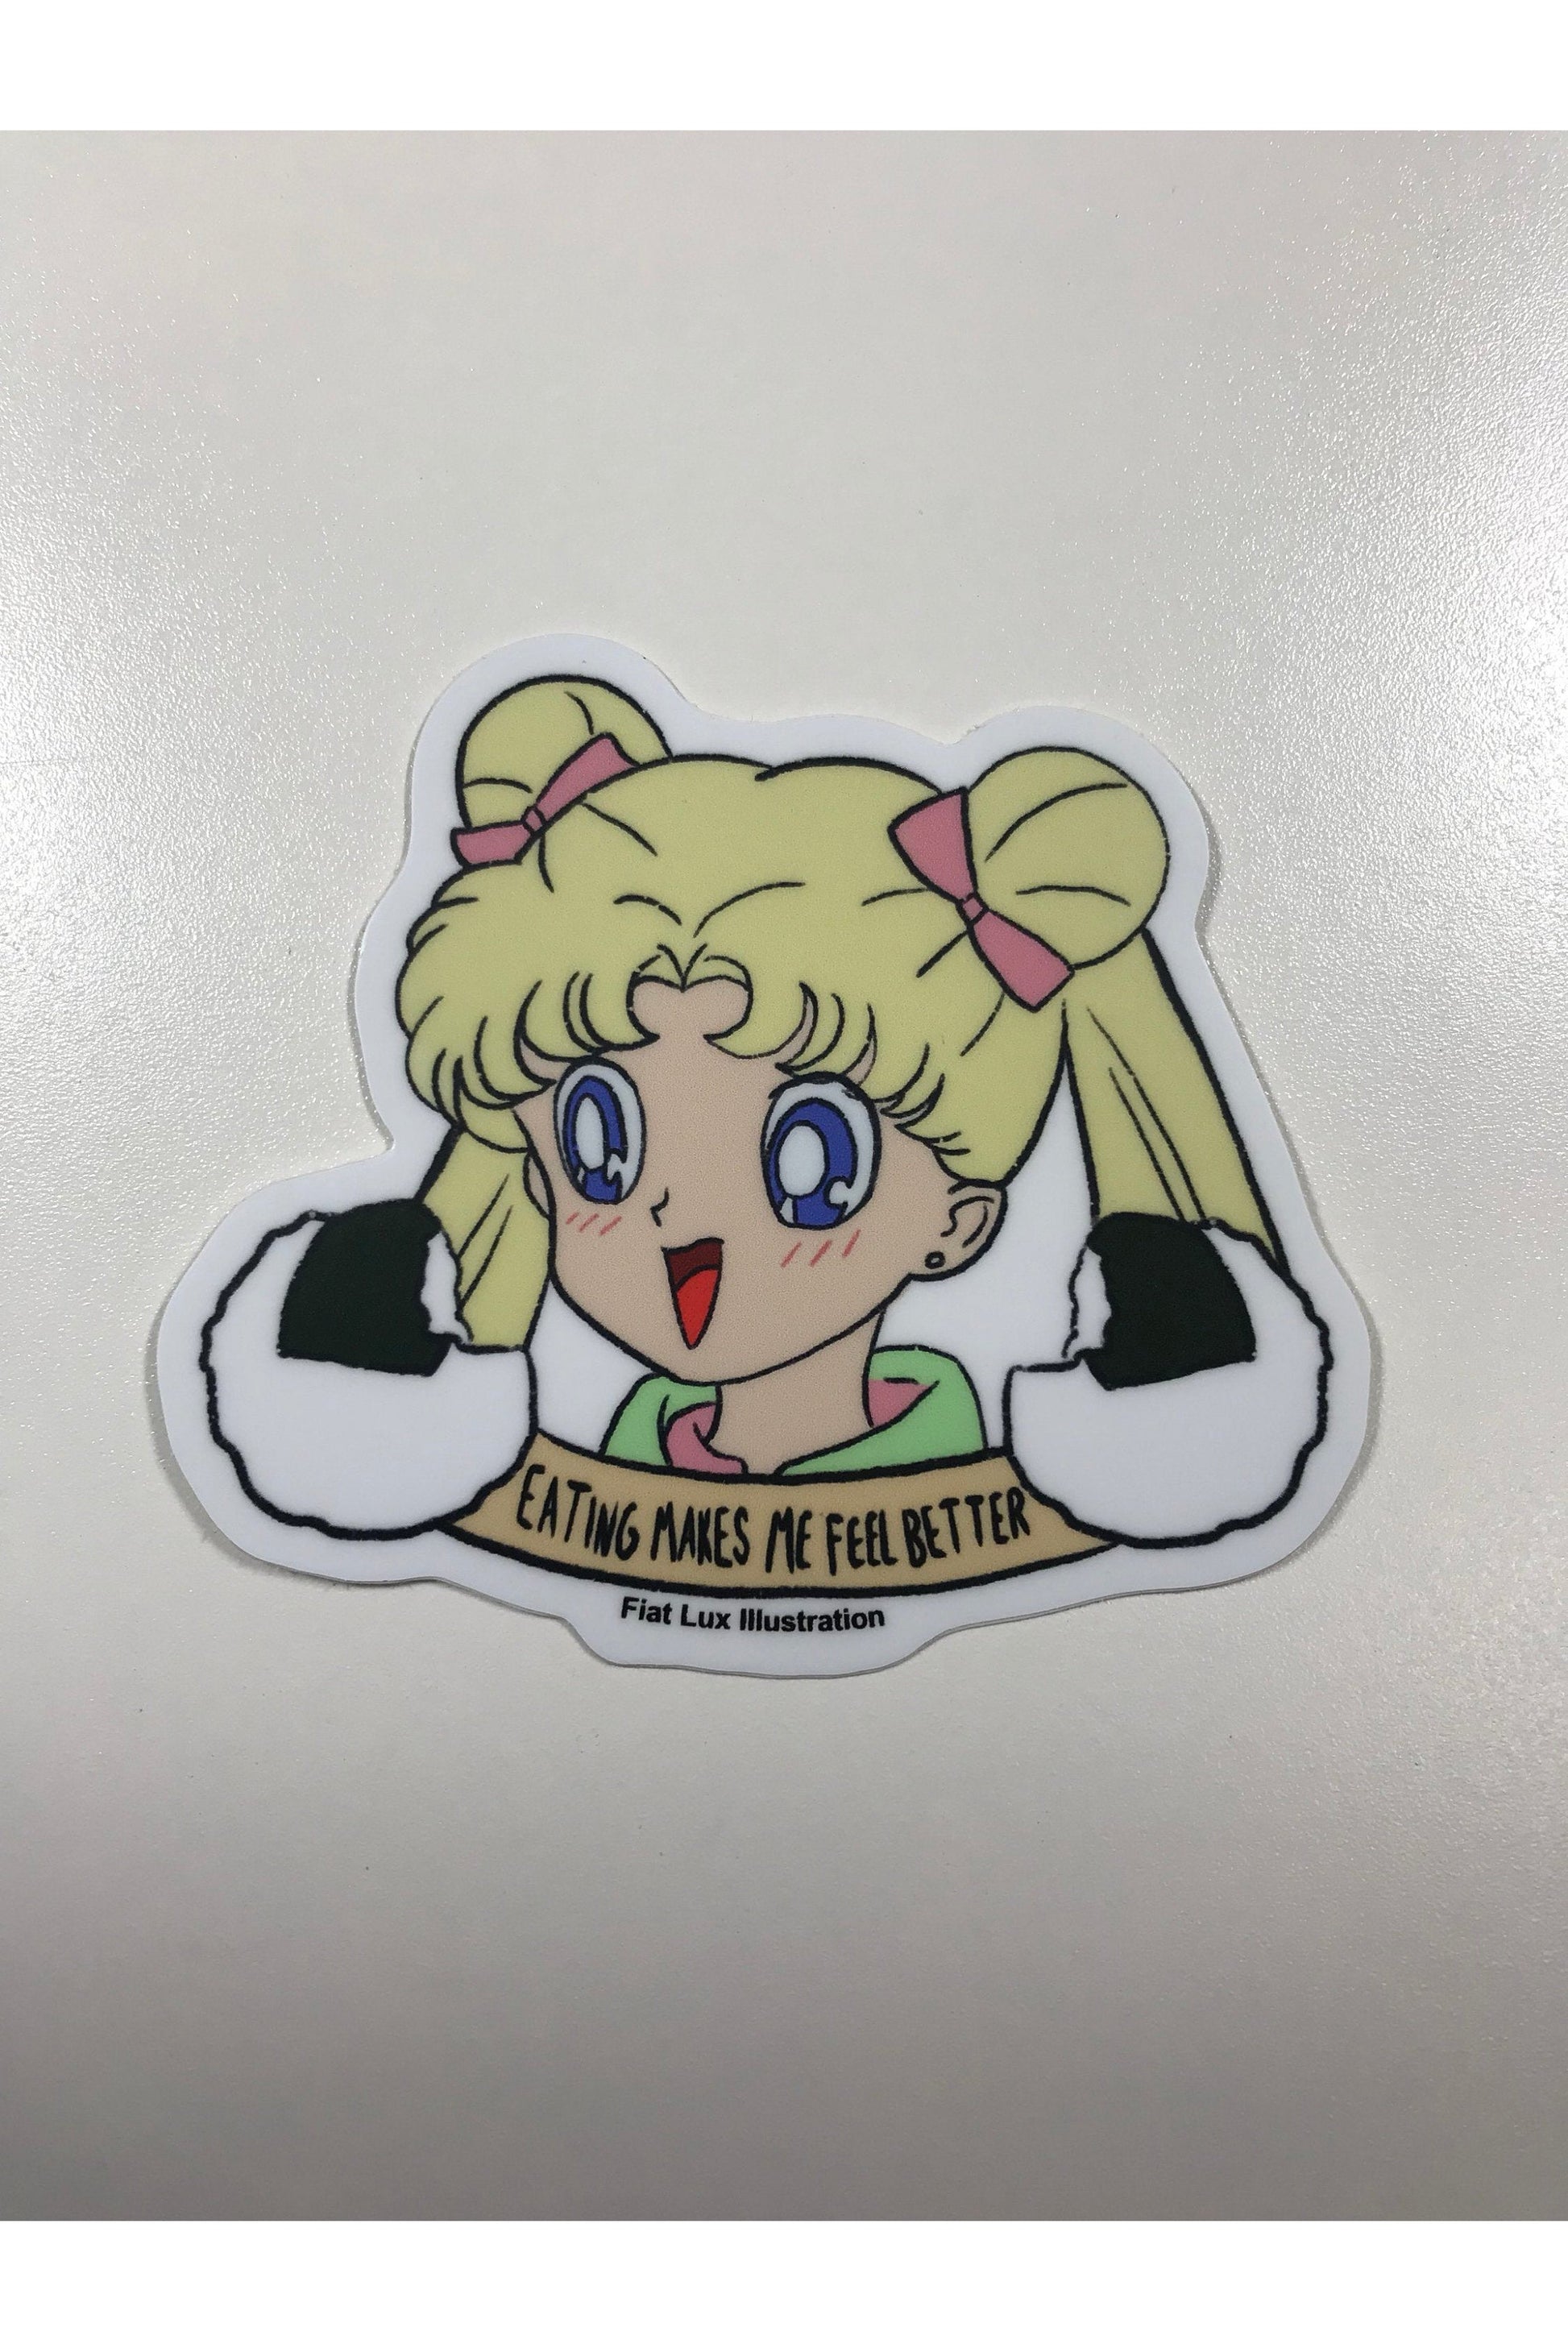 Sailor Moon Pretty Guardian Usagi Tsukino "Eating Makes Me Feel Better" Vinyl Sticker.